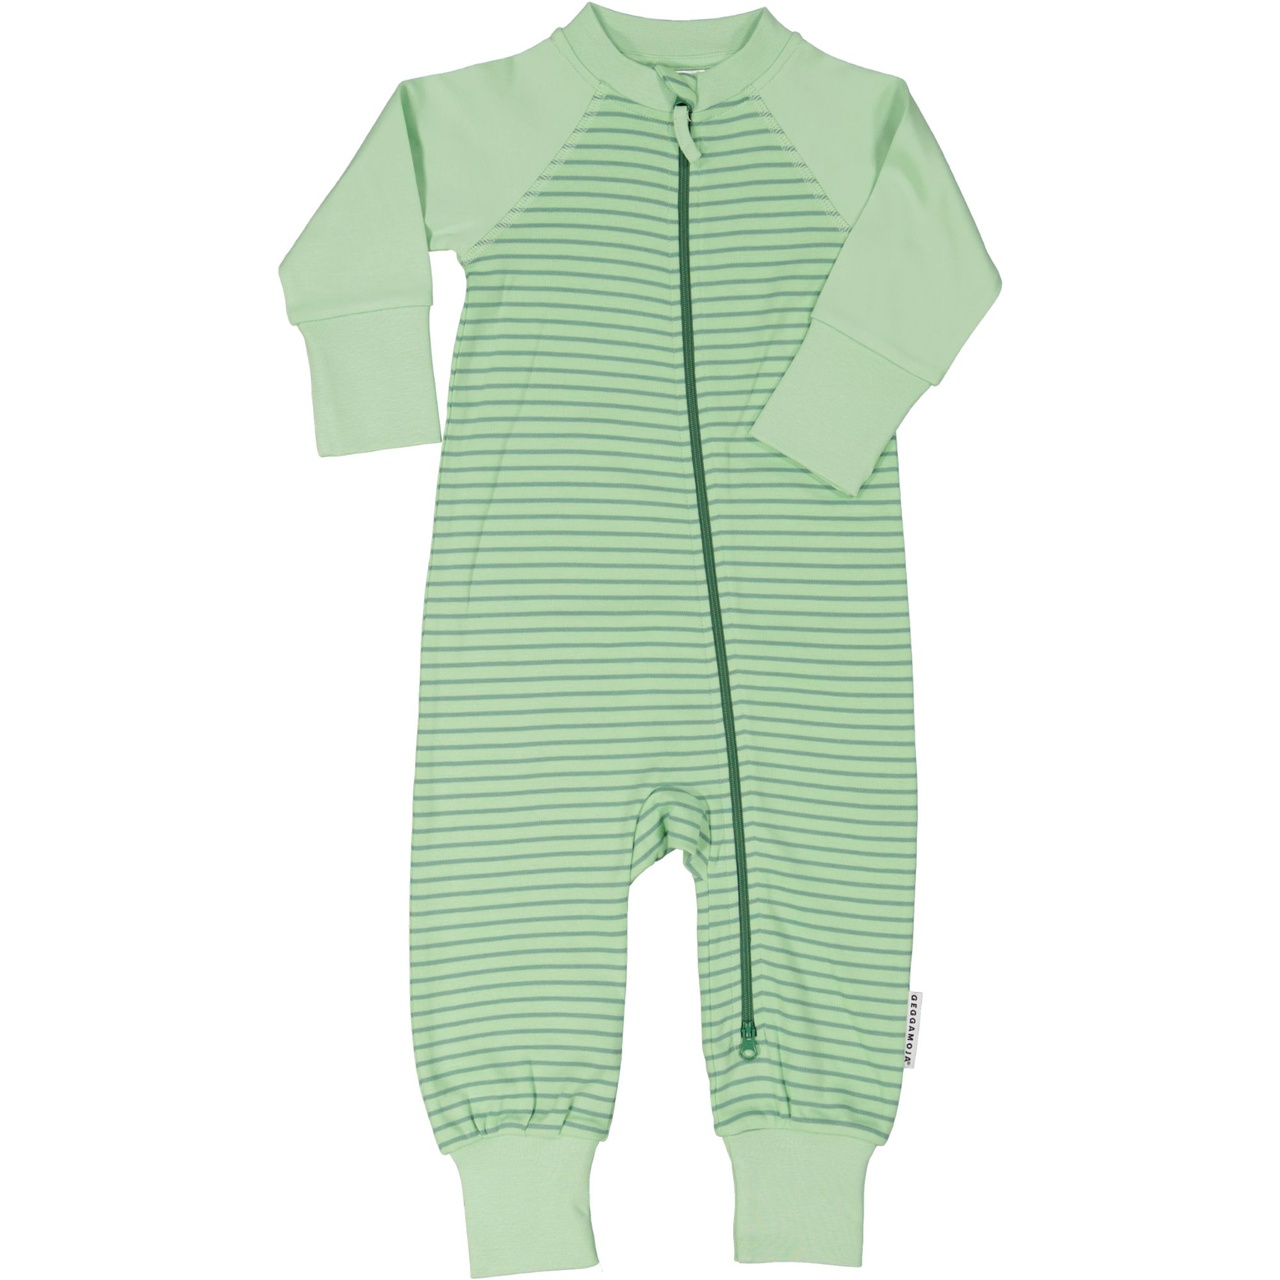 Pyjamas L.green/green 17